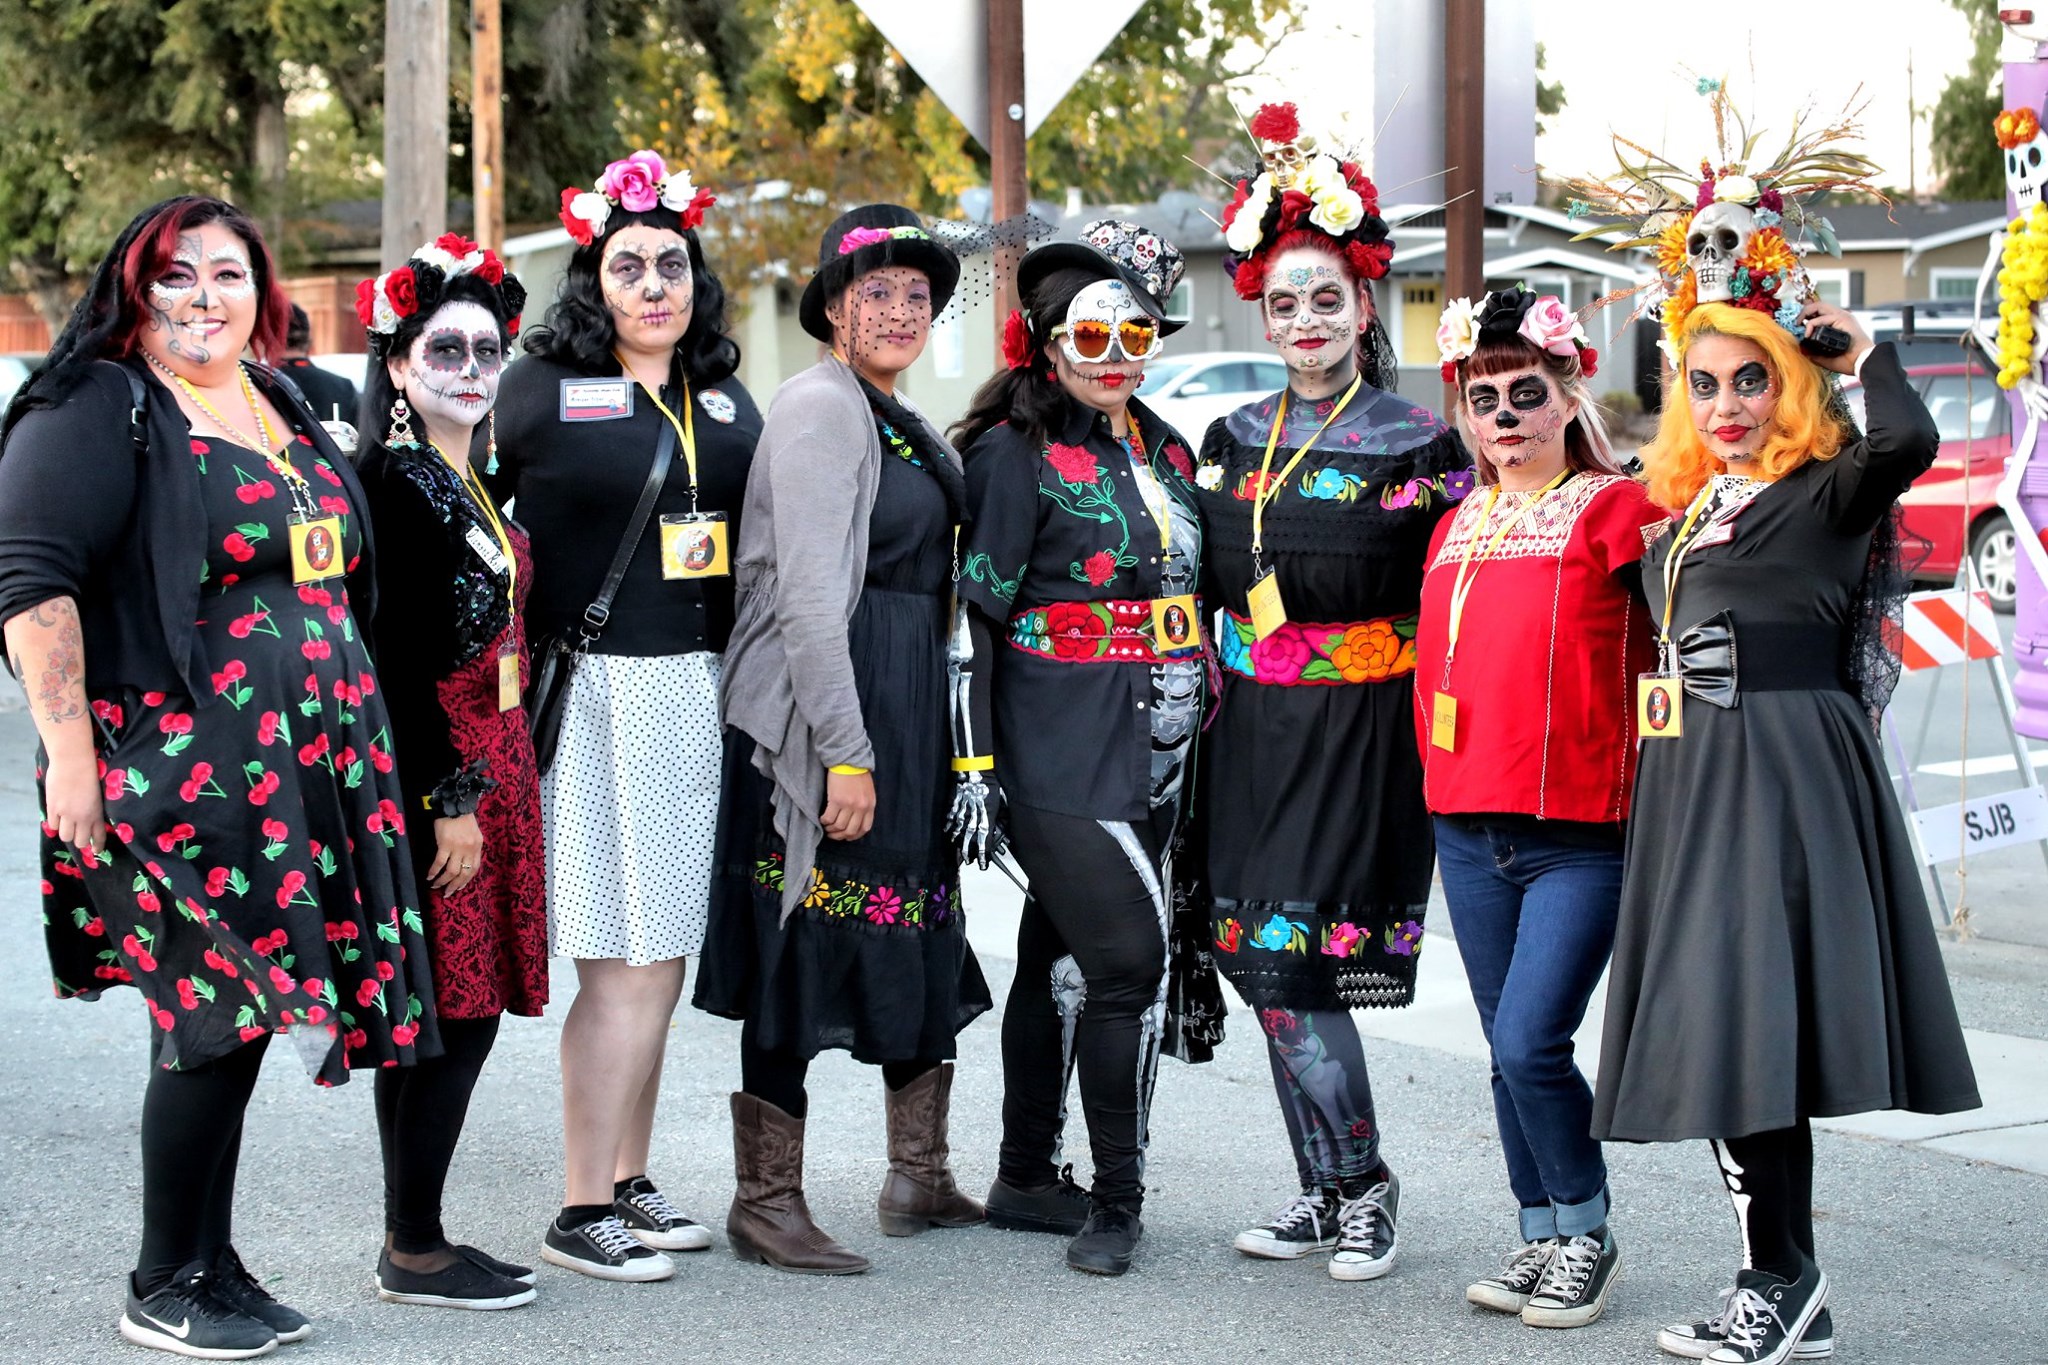 Group of volunteers at Dia de los Muertos event